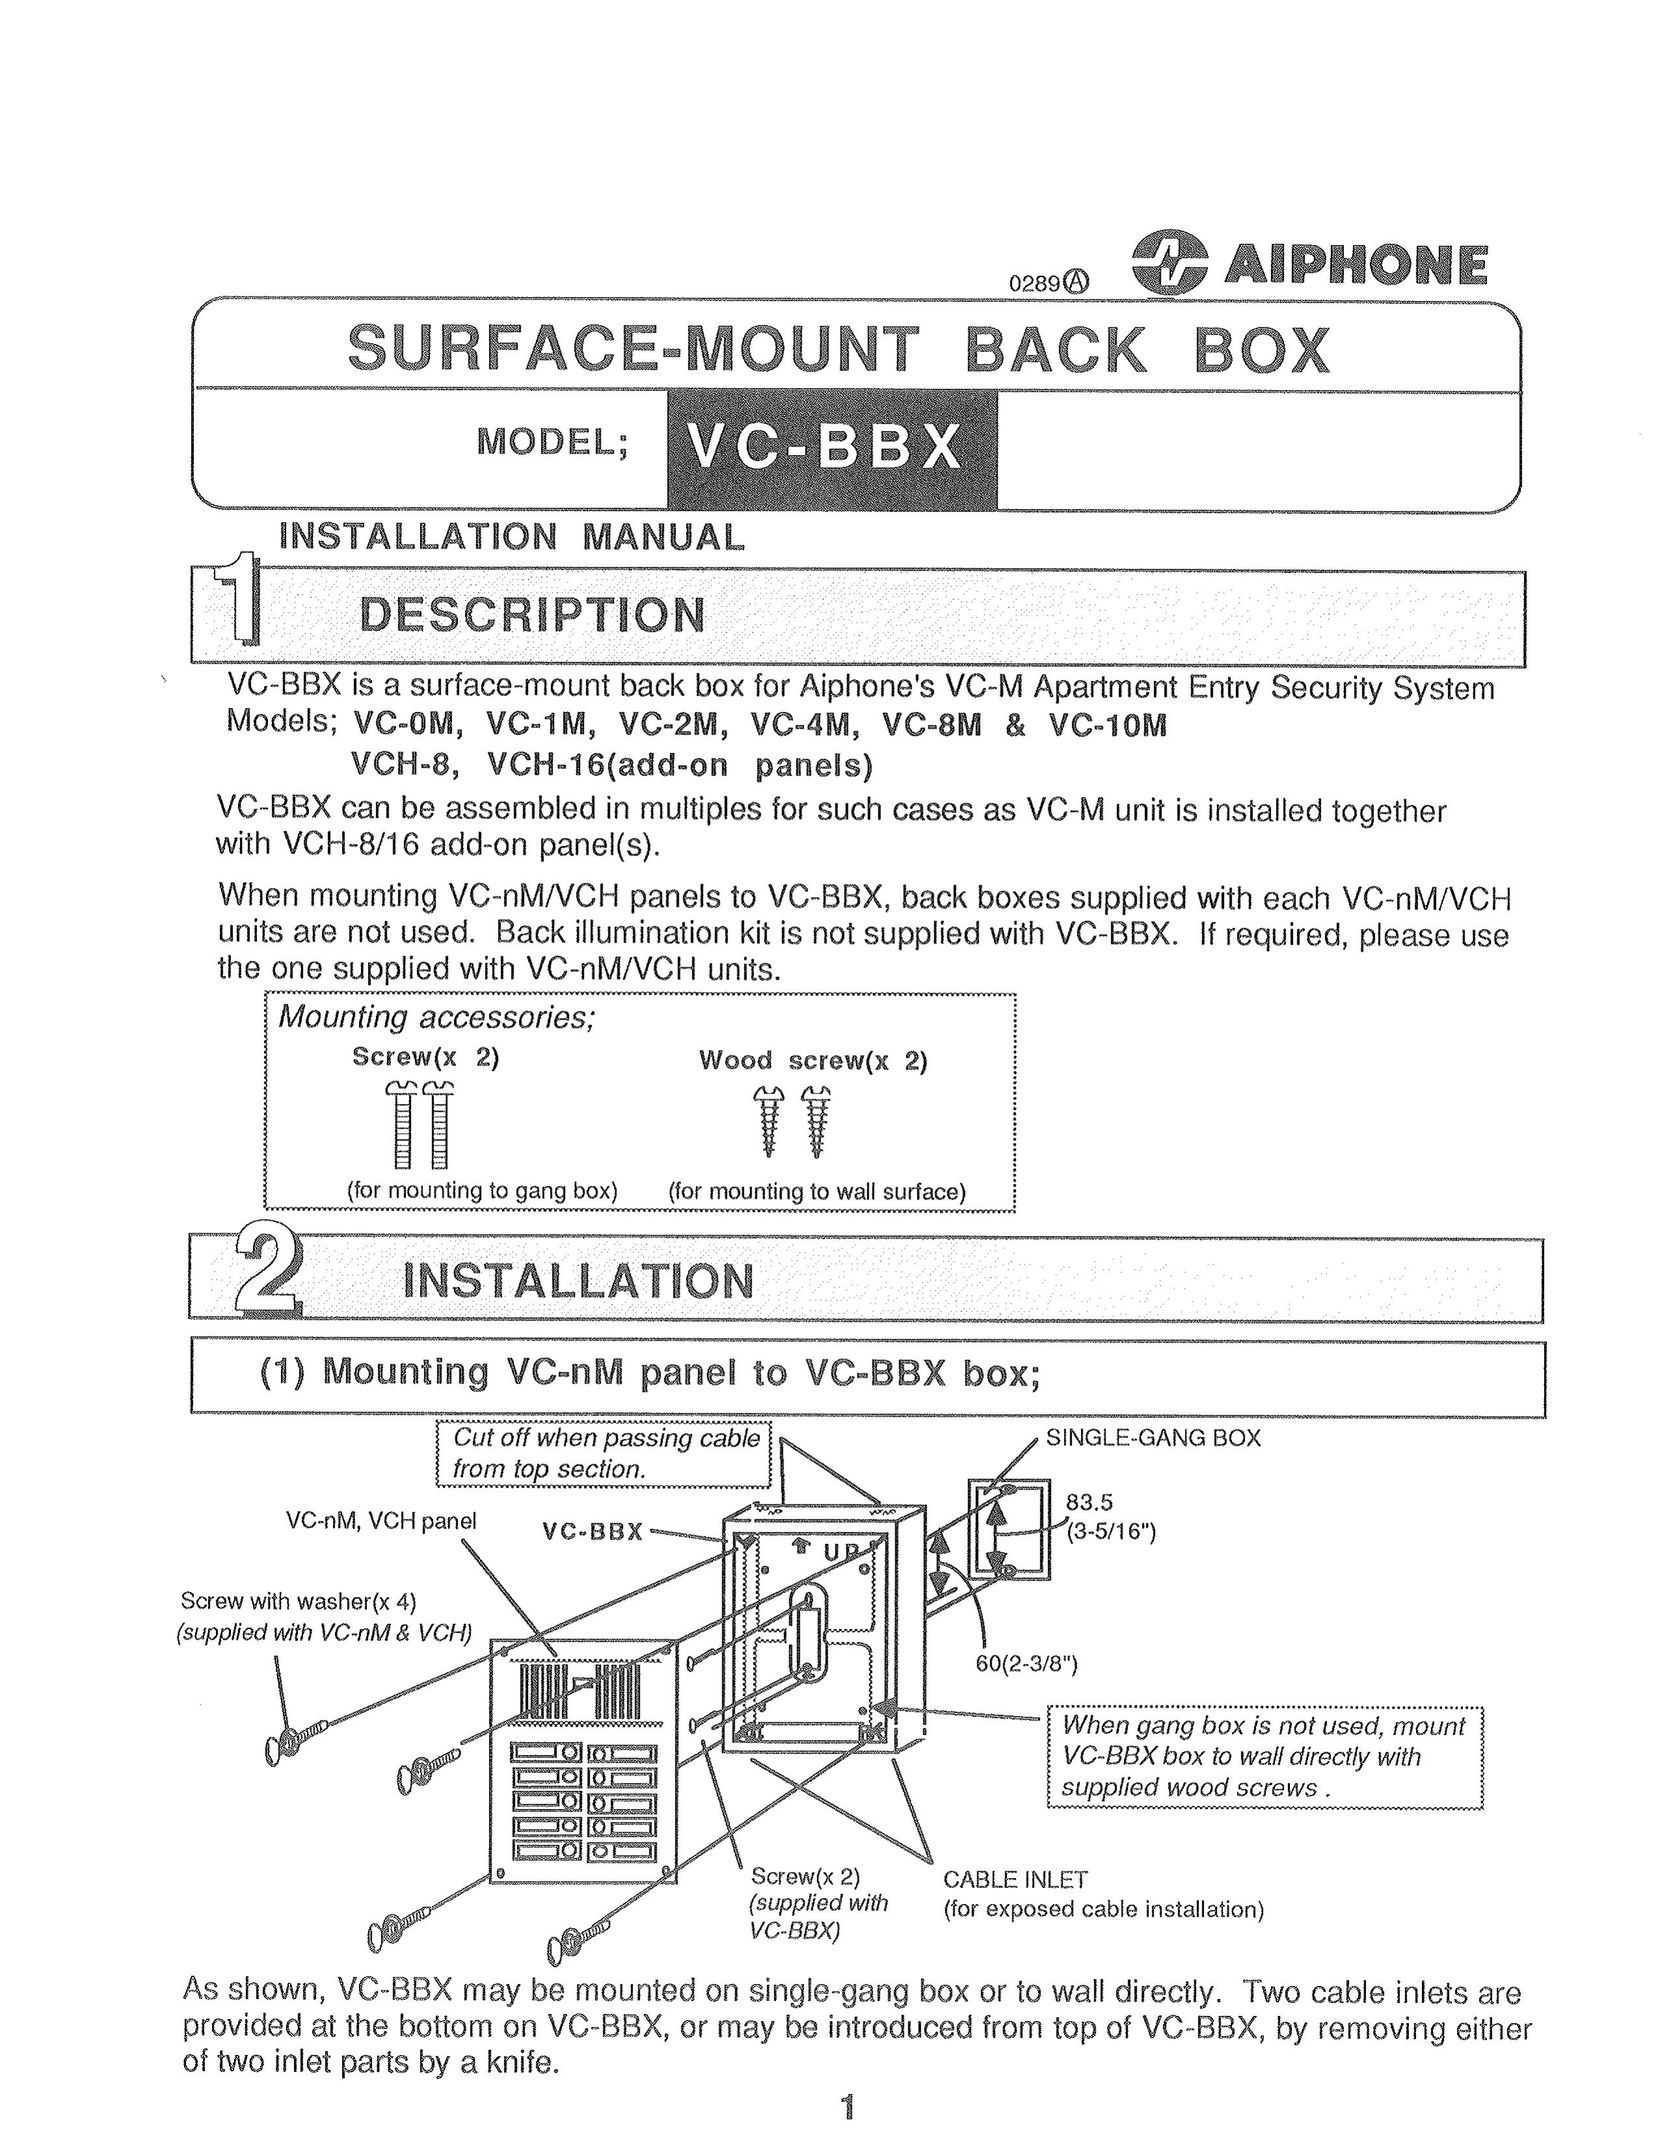 Aiphone VC-BBX Answering Machine User Manual